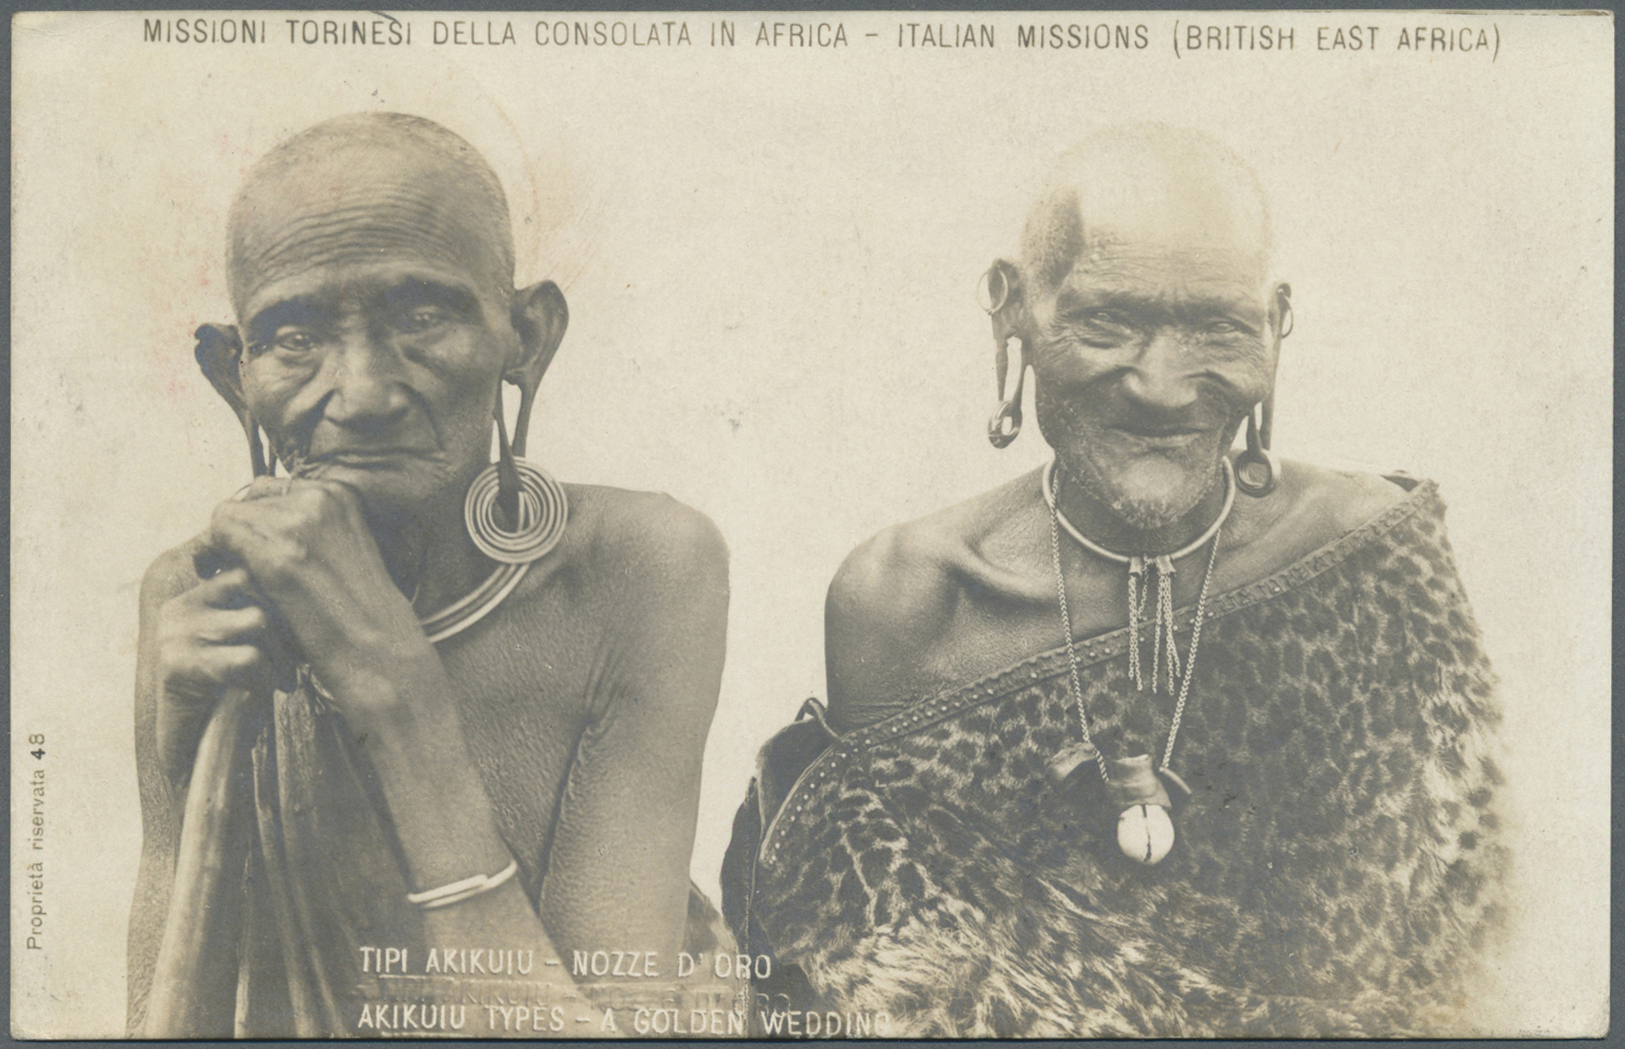 Br Kenia - Britisch Ostafrika: 1911. Picture Post Card Of 'Akikuiu Tribe, Golden Wedding Photo' Addressed To England Bea - British East Africa